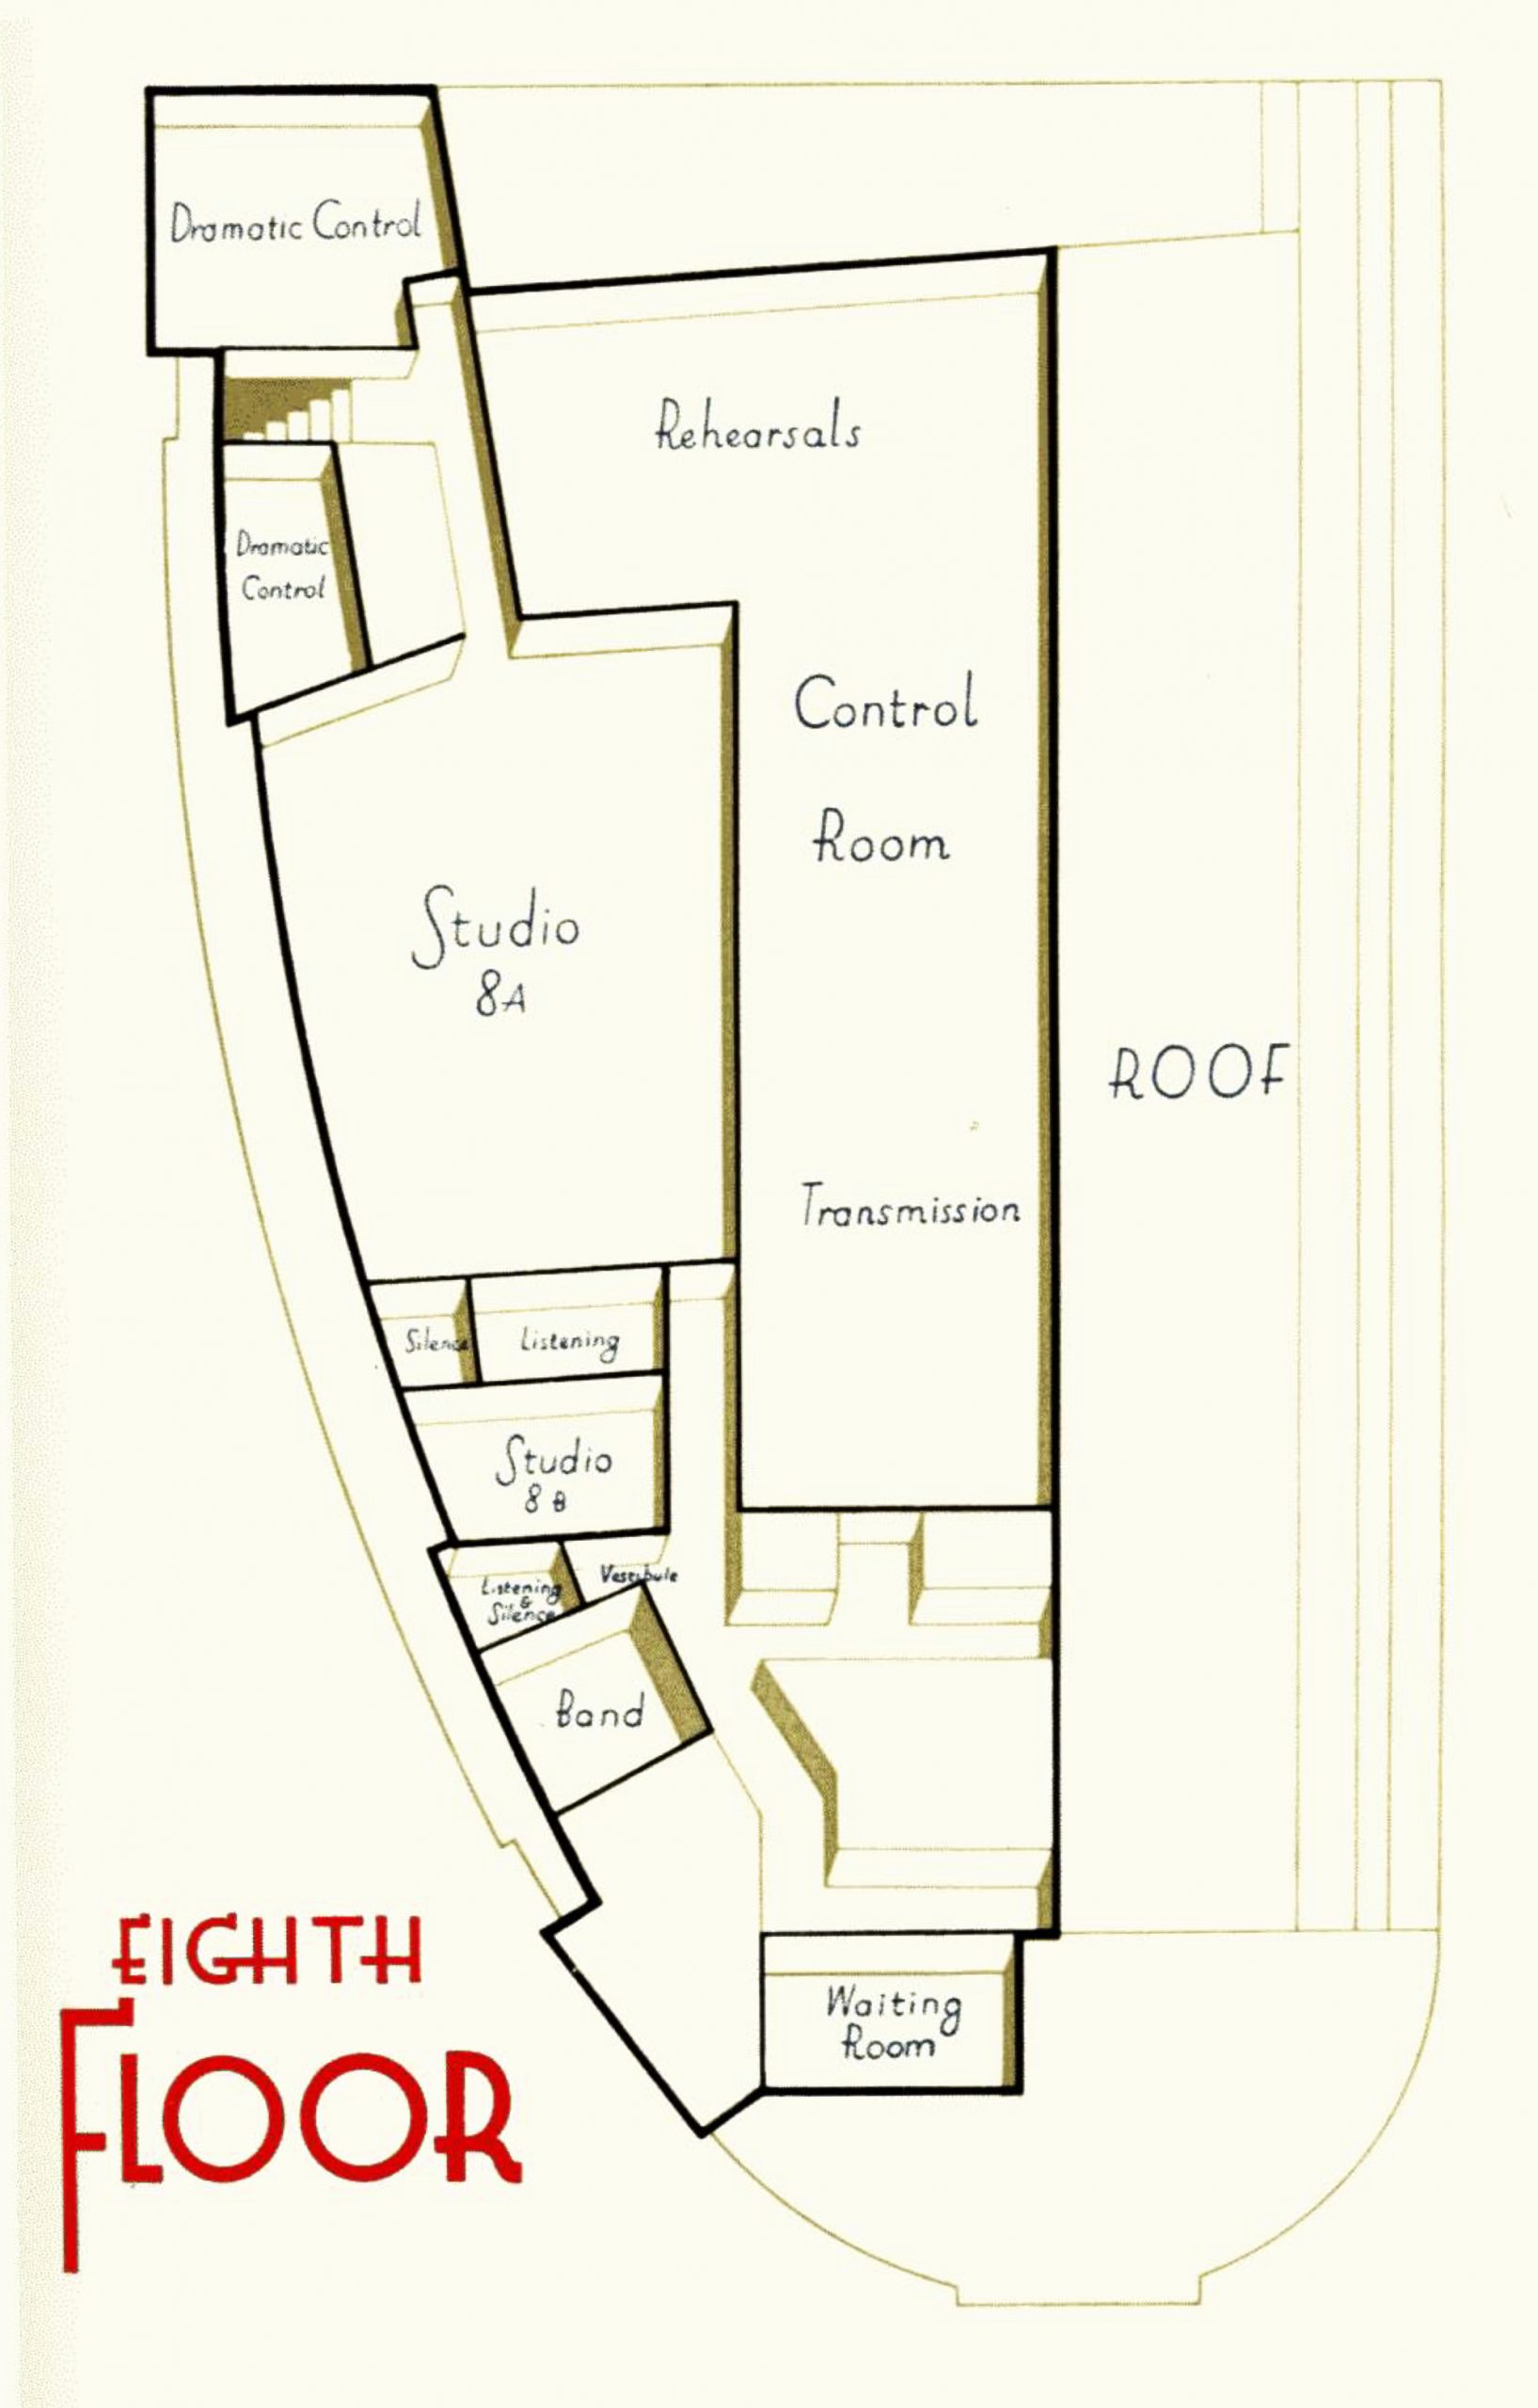 Diagram of the eighth floor